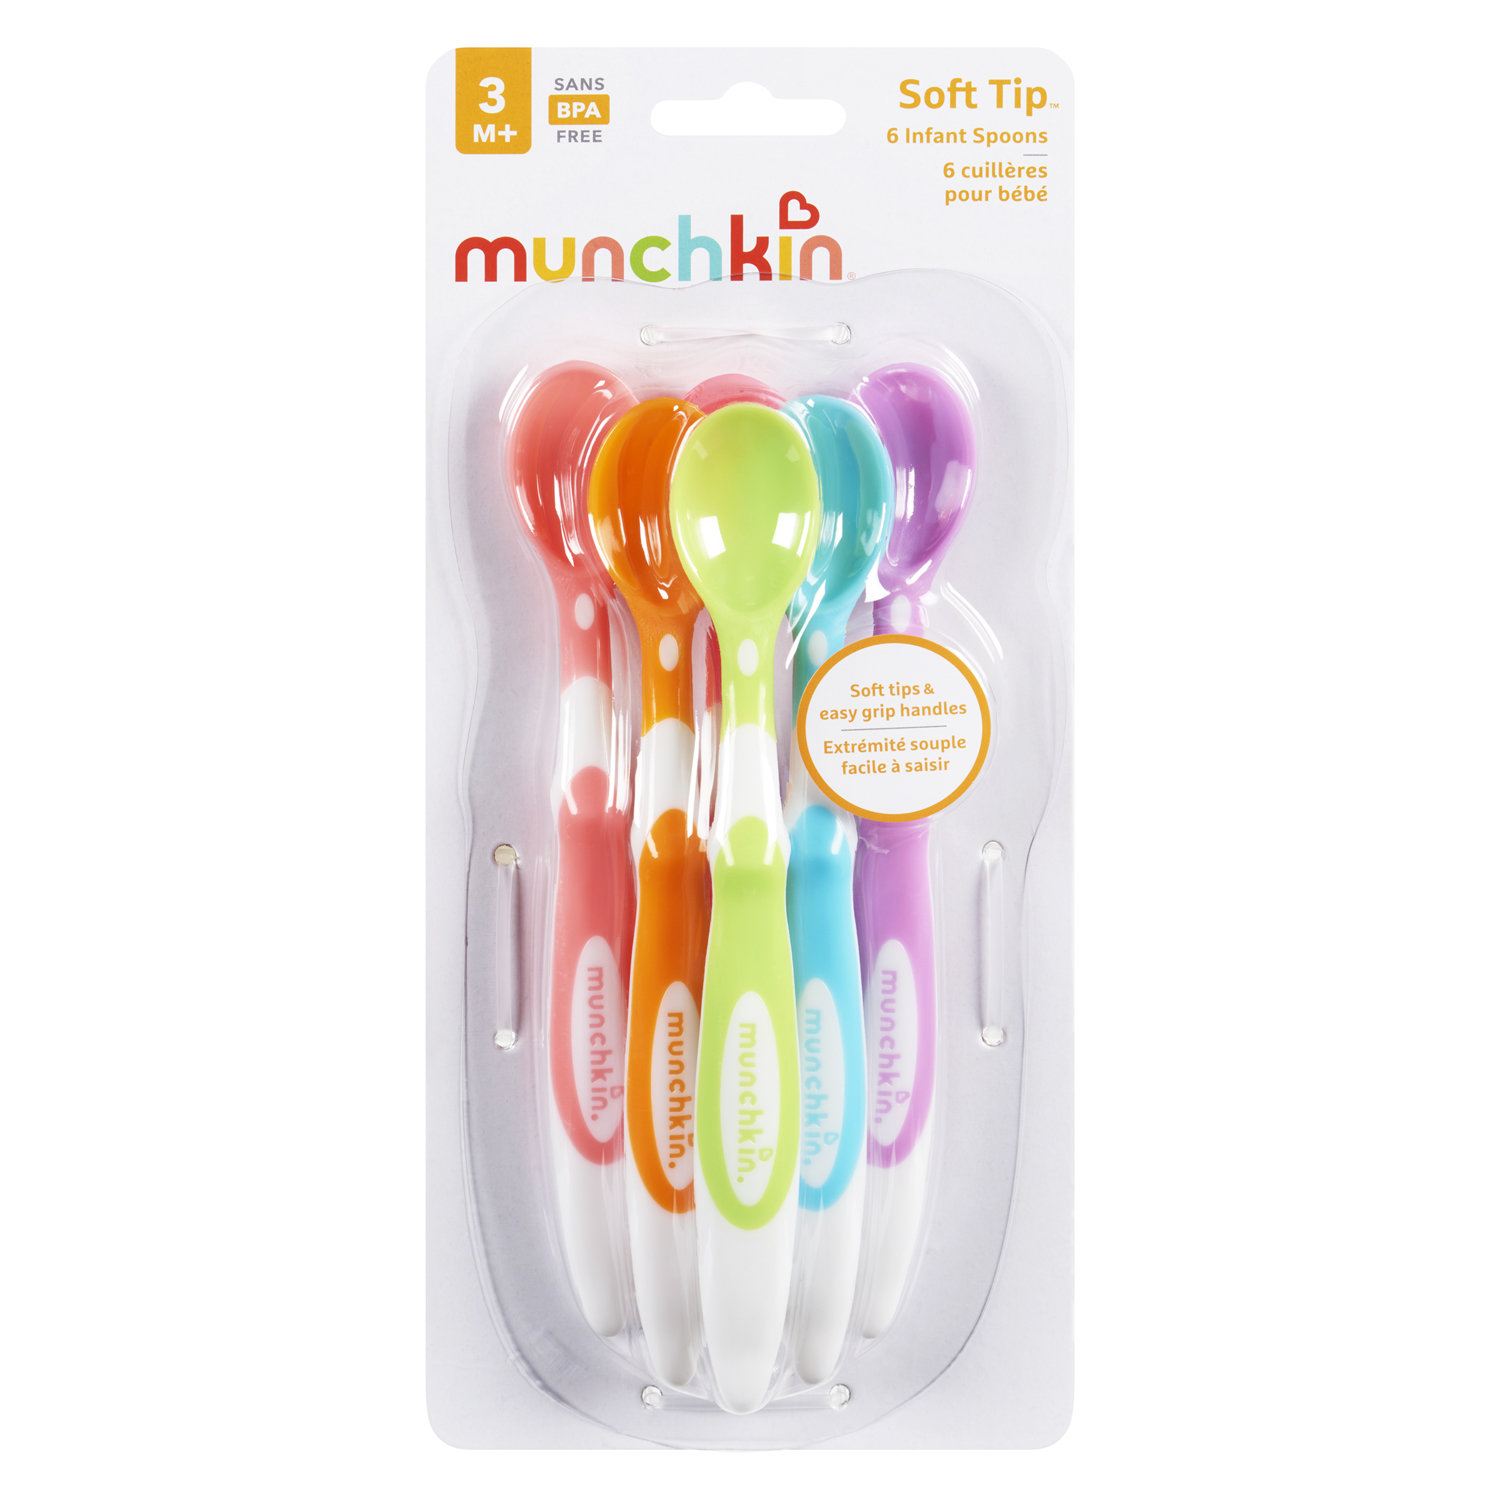 Munchkin - Soft-Tip Infant Spoons